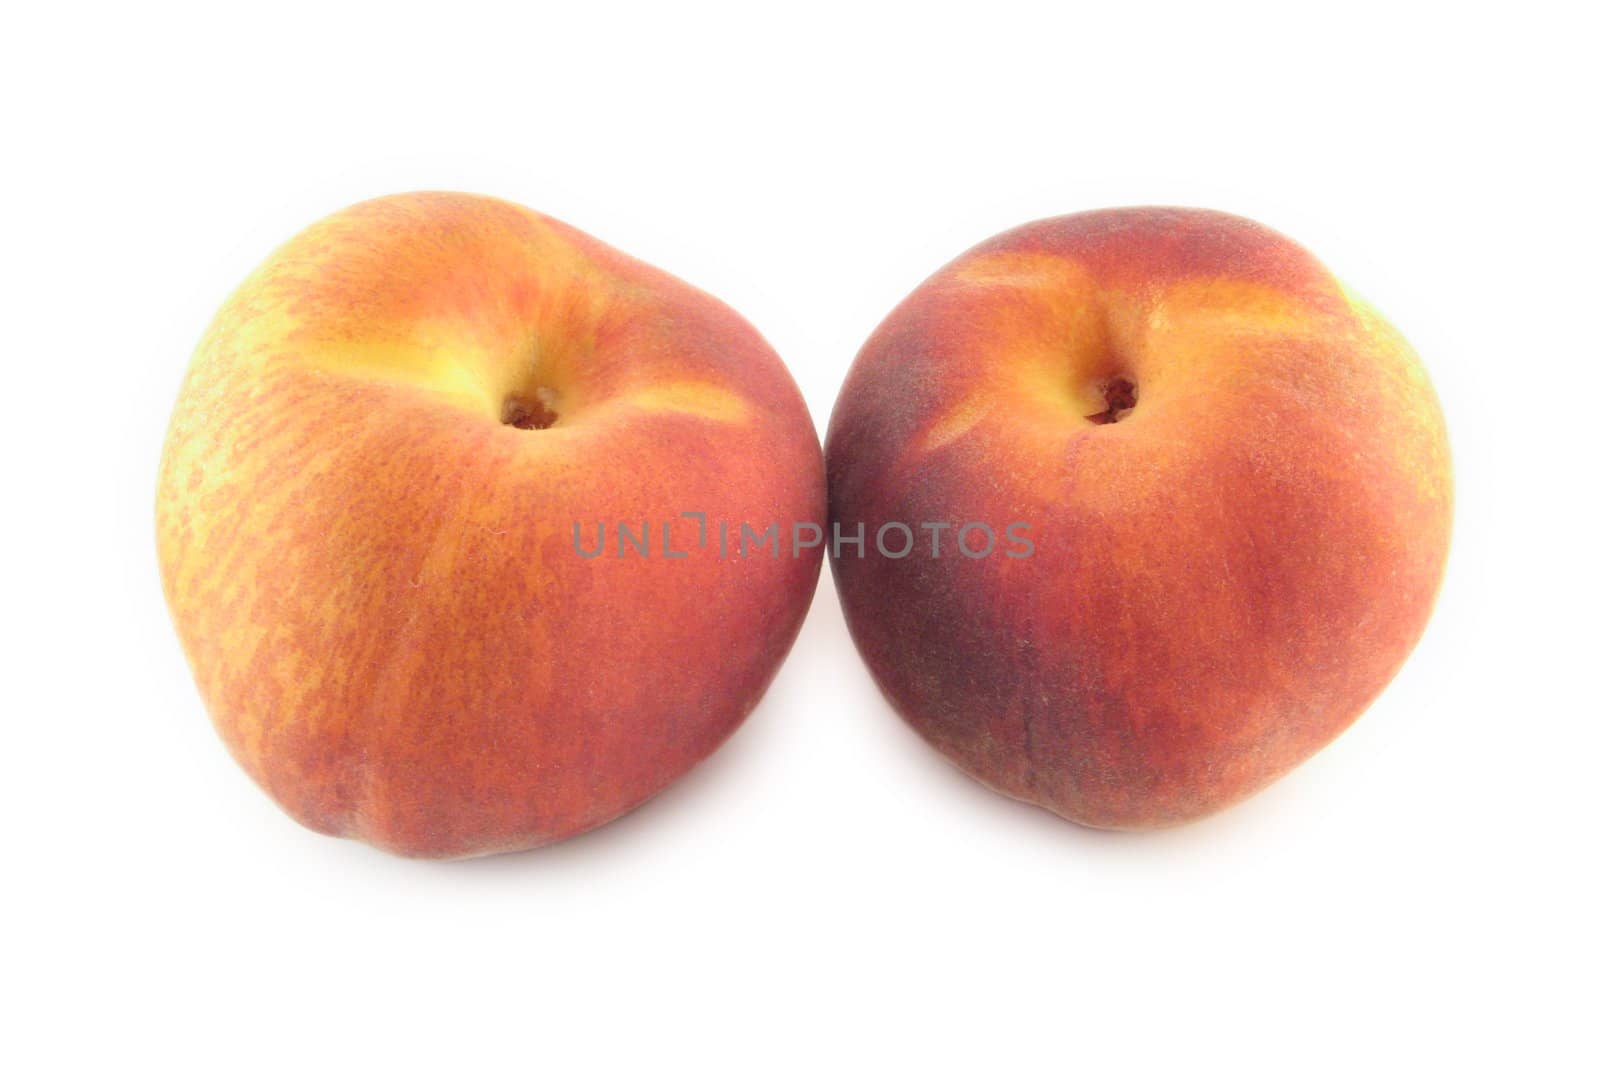 peaches by jbouzou